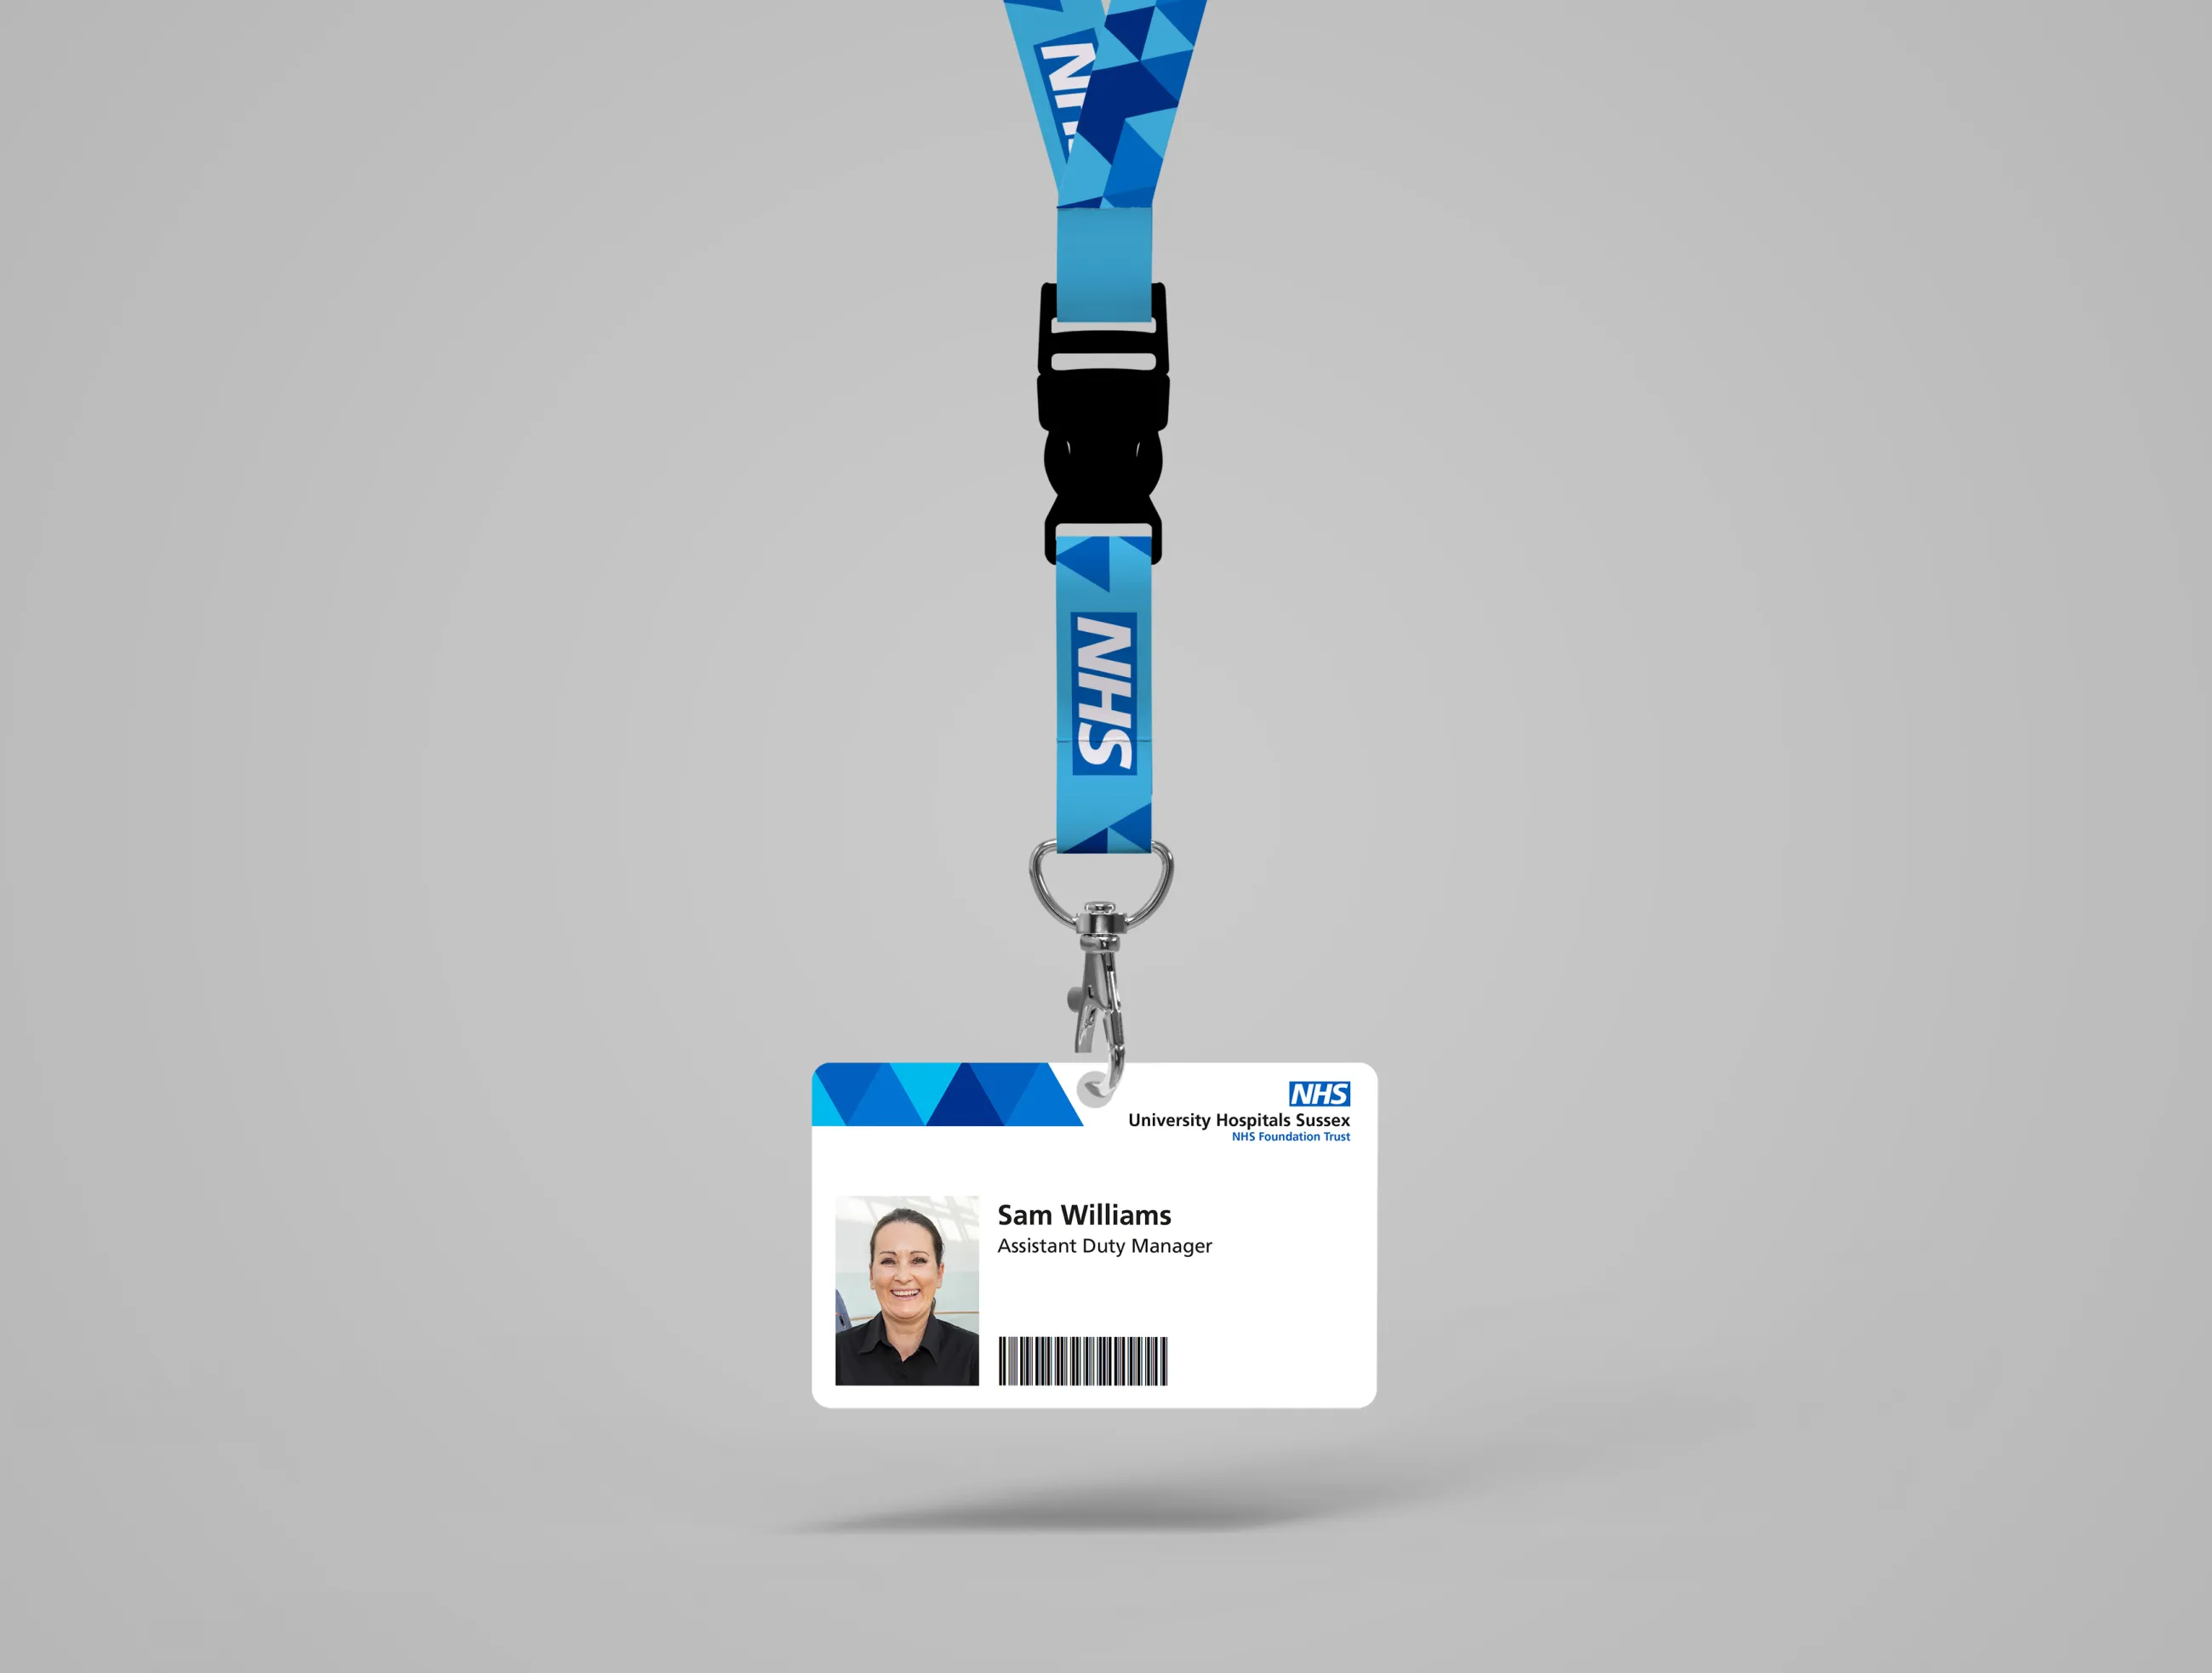 University Hospital Sussex ID card